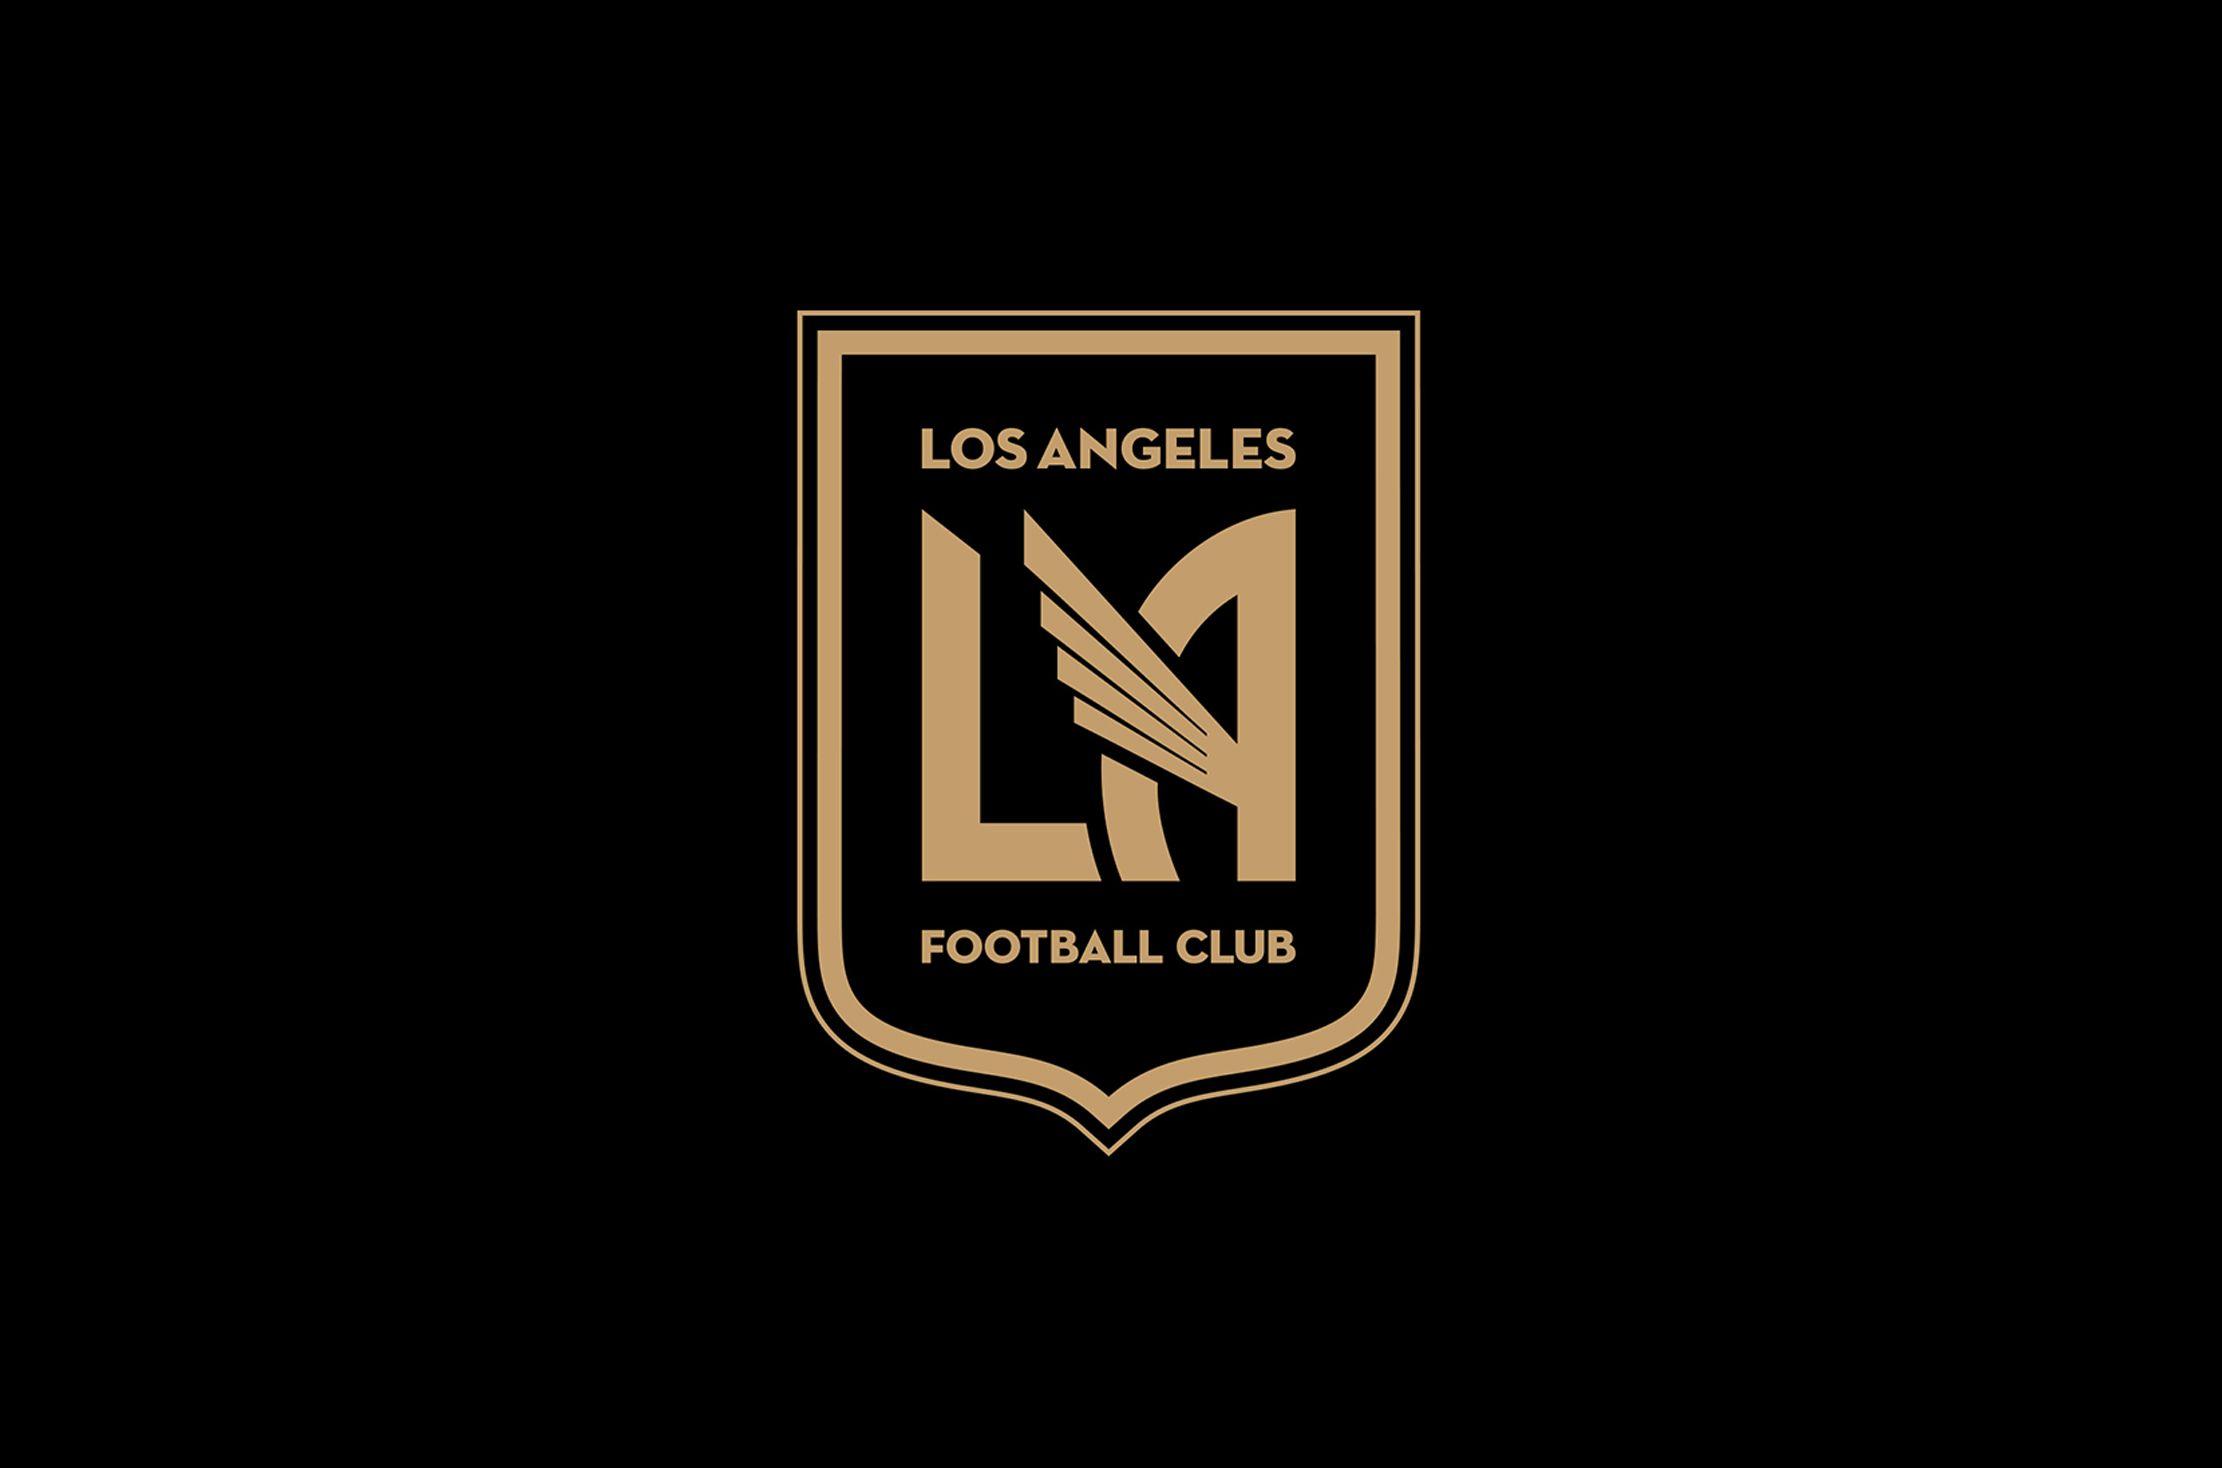 La Logo - A Logo Design from Scratch: The L.A. Soccer Team's Mark